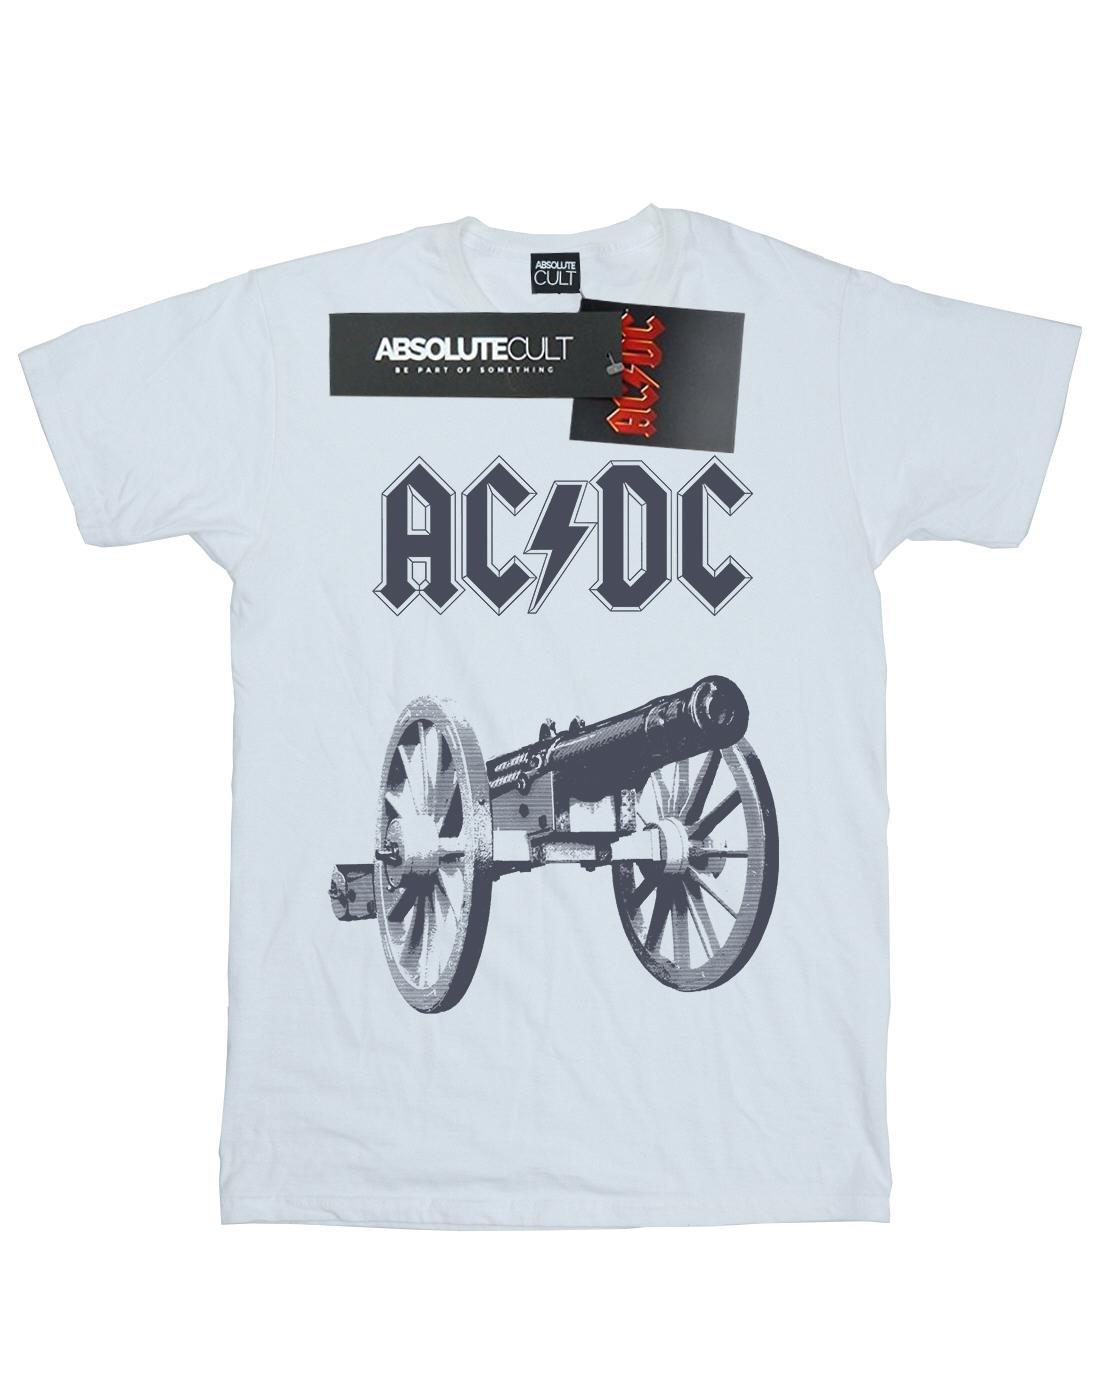 Acdc For Those About To Rock Tshirt Herren Weiss M von AC/DC